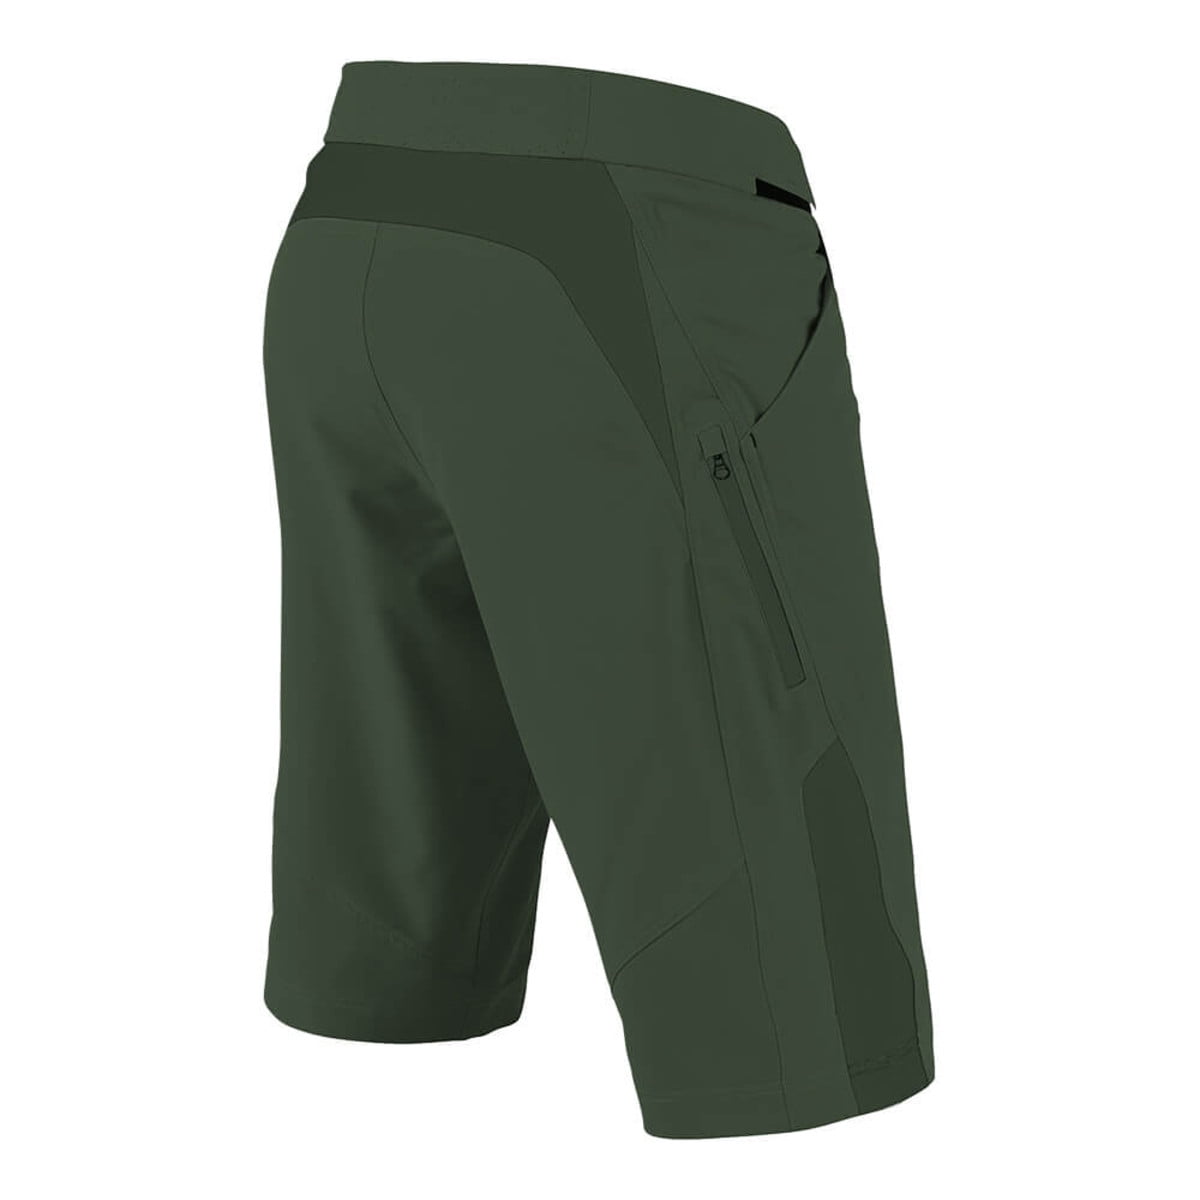 Green Troy Lee Ruckus Mountain Bike Shorts